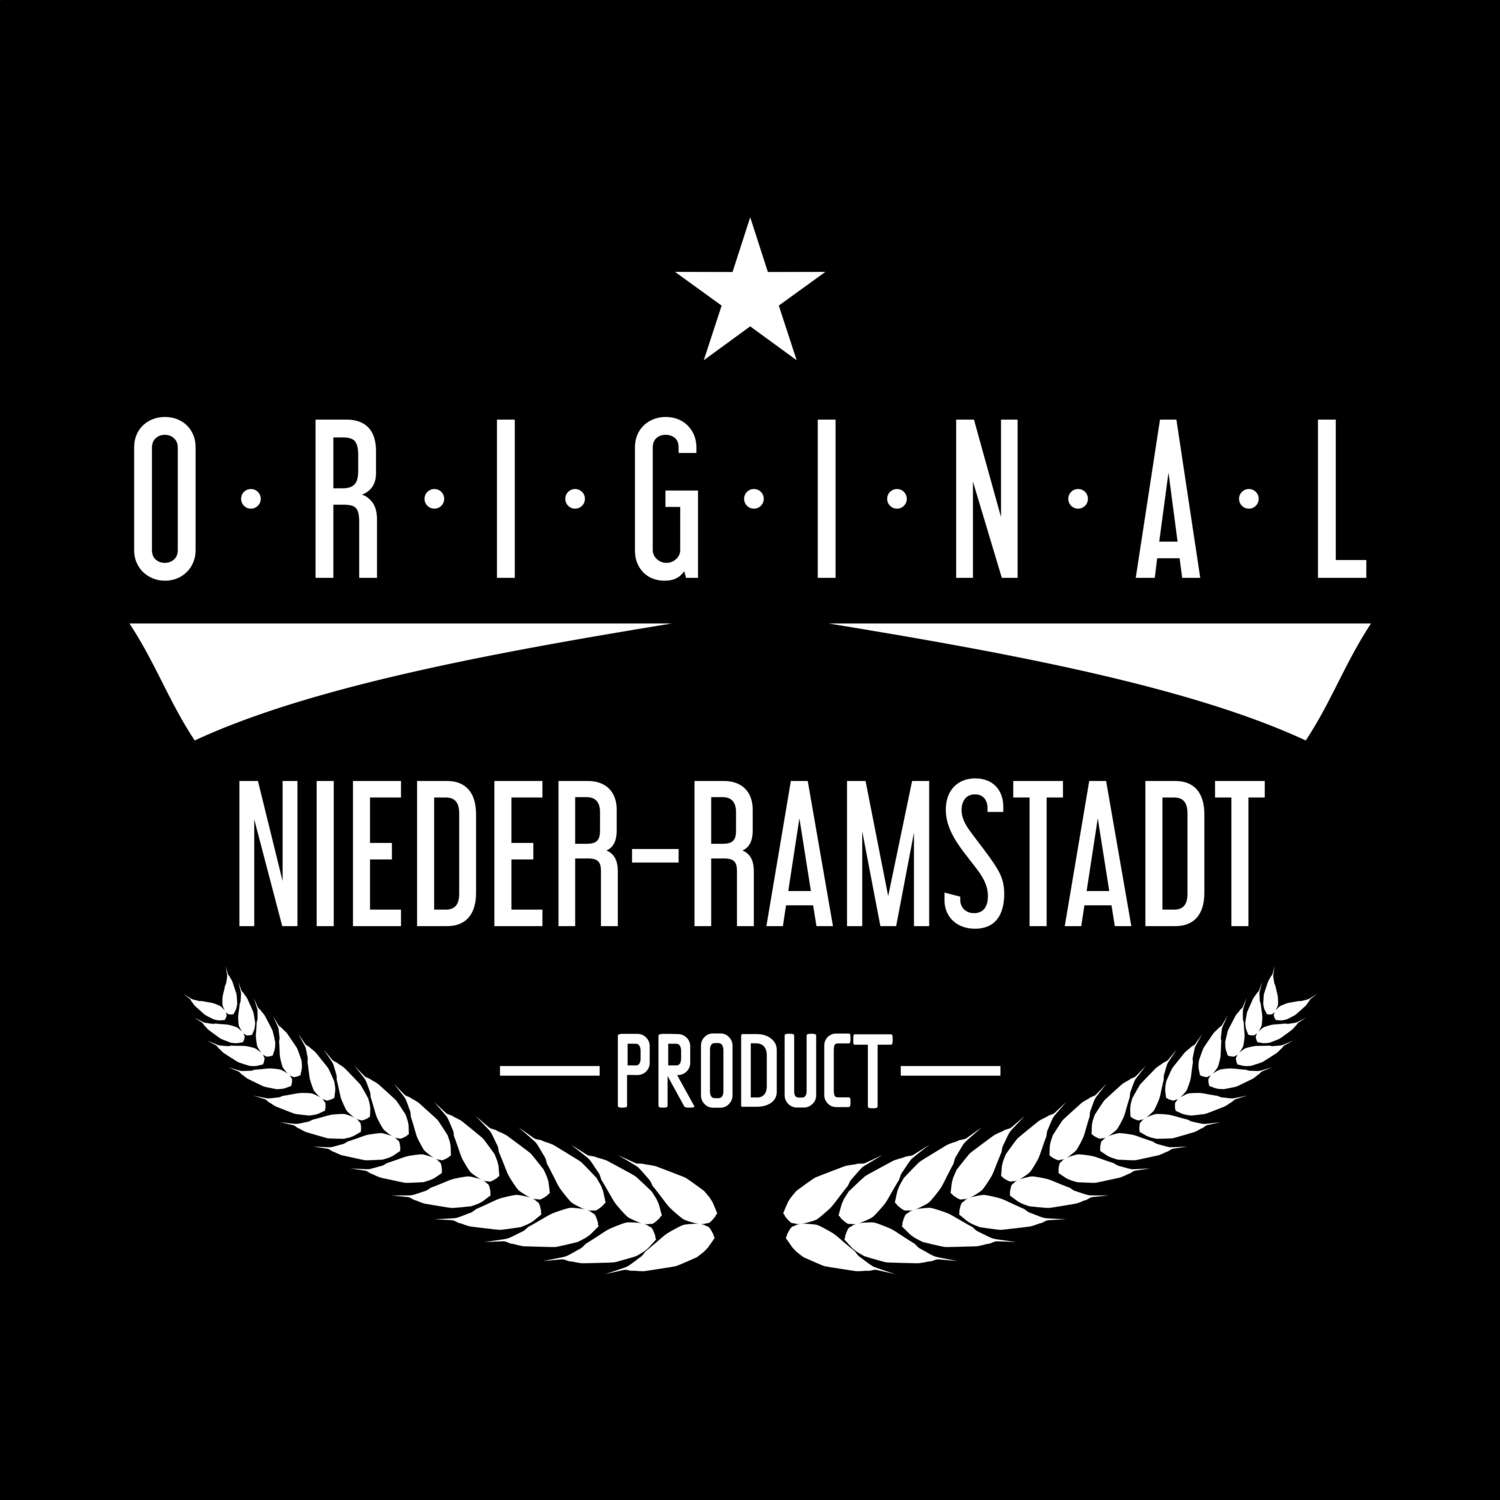 Nieder-Ramstadt T-Shirt »Original Product«